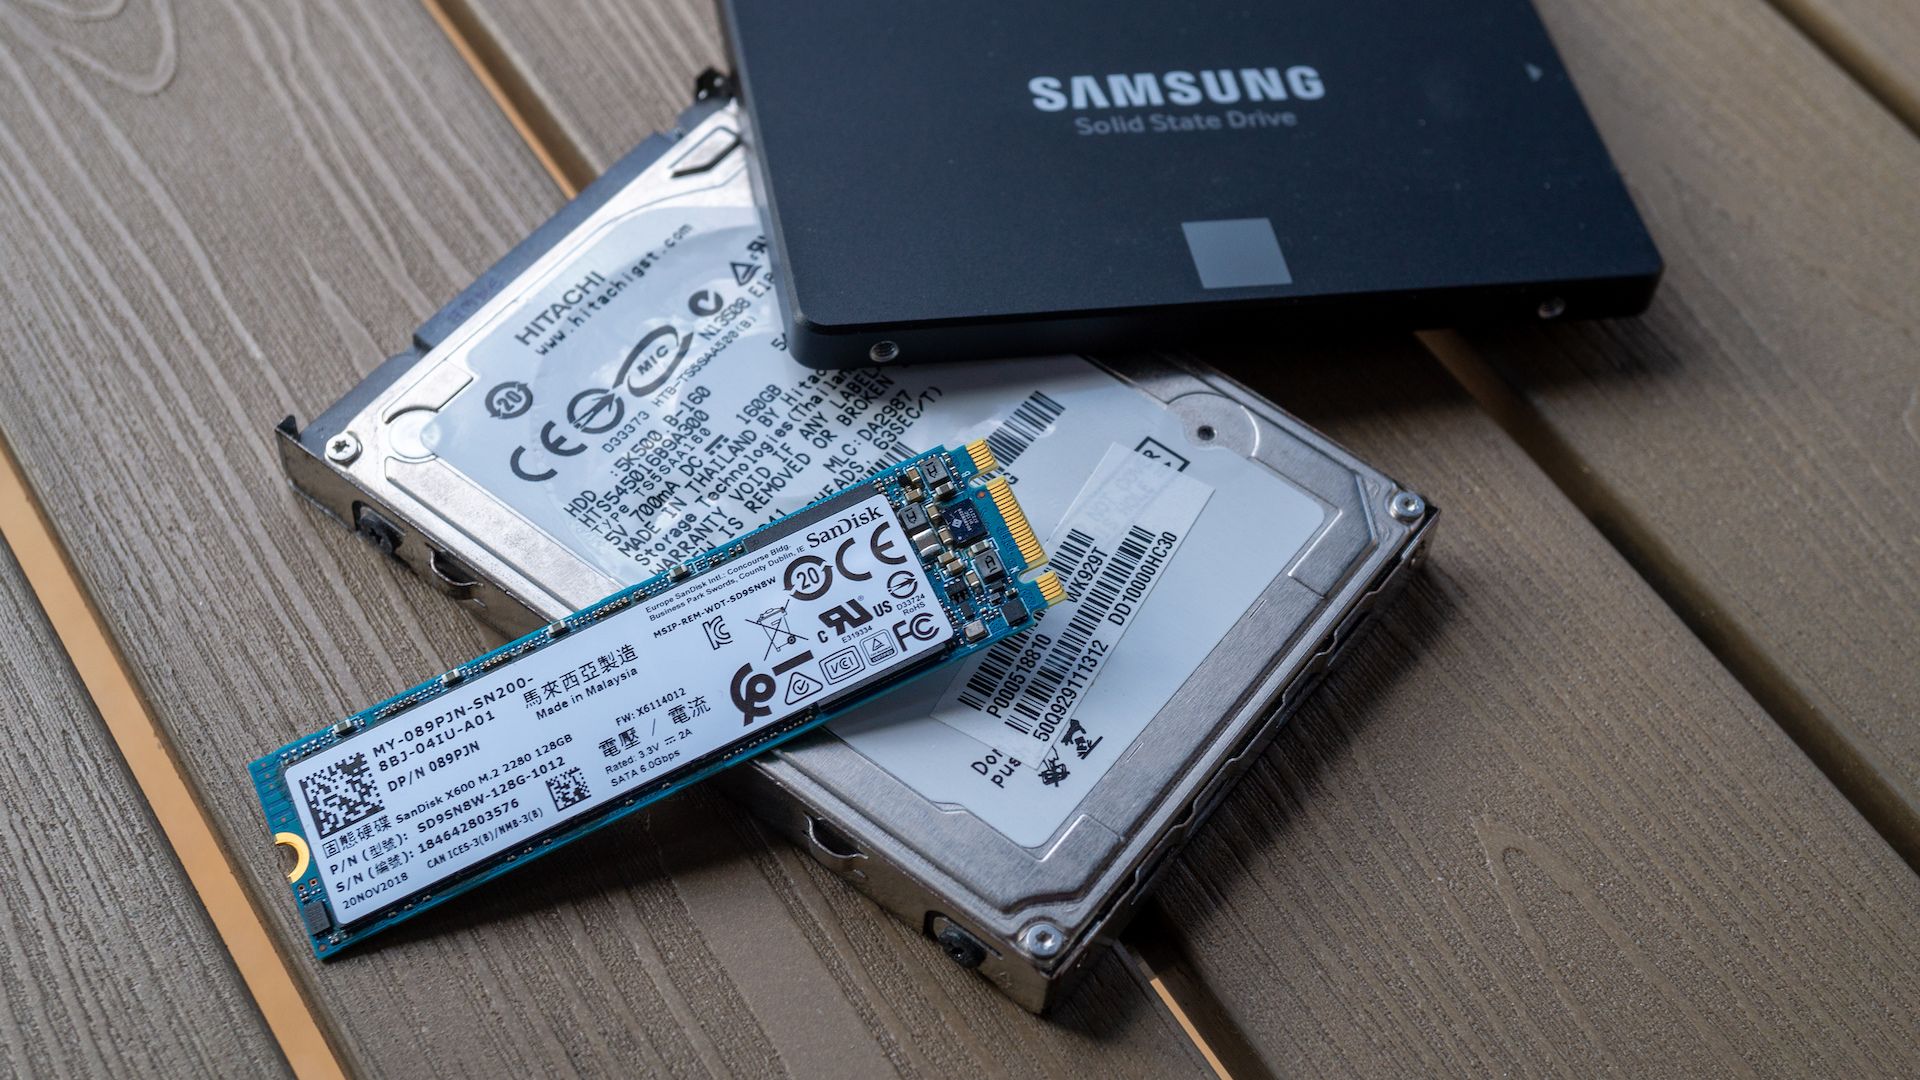 Samsung 850 EVO SSD with M.2 SSD and SATA hard drive 2